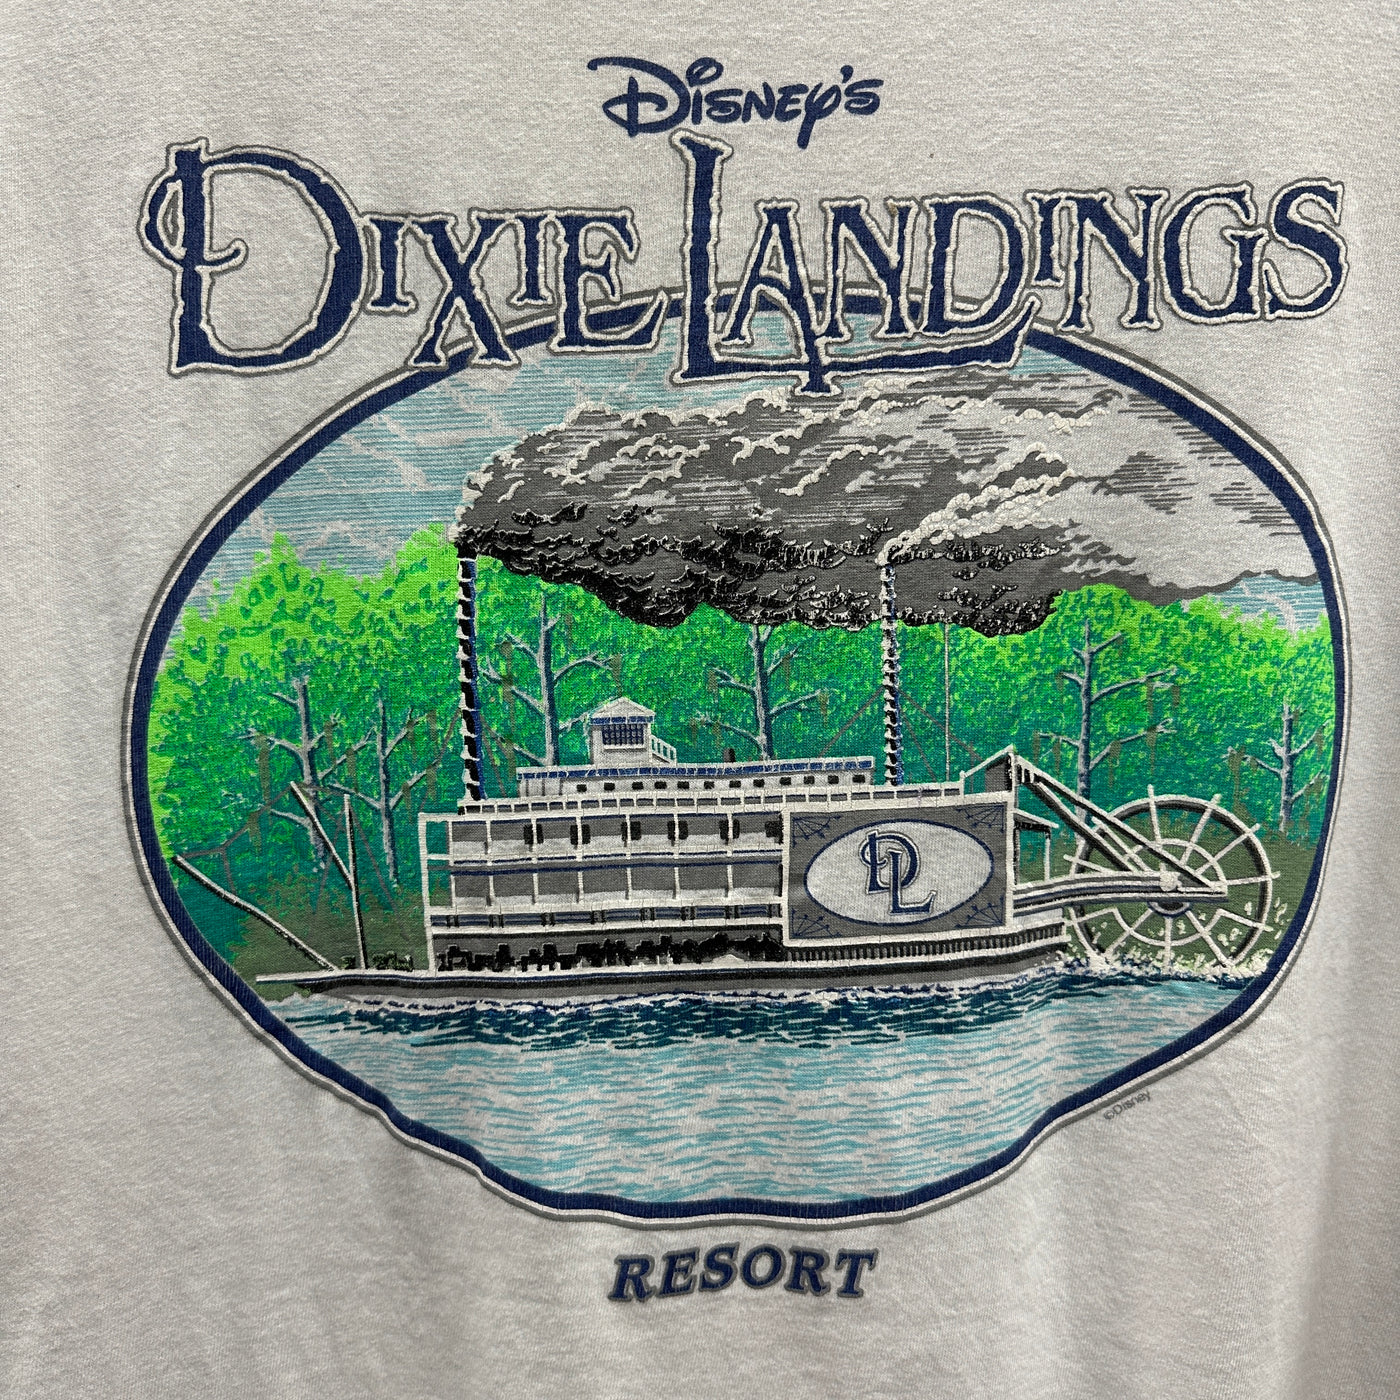 90's Disney's Dixie Landings Resort White Graphic T-shirt sz XL